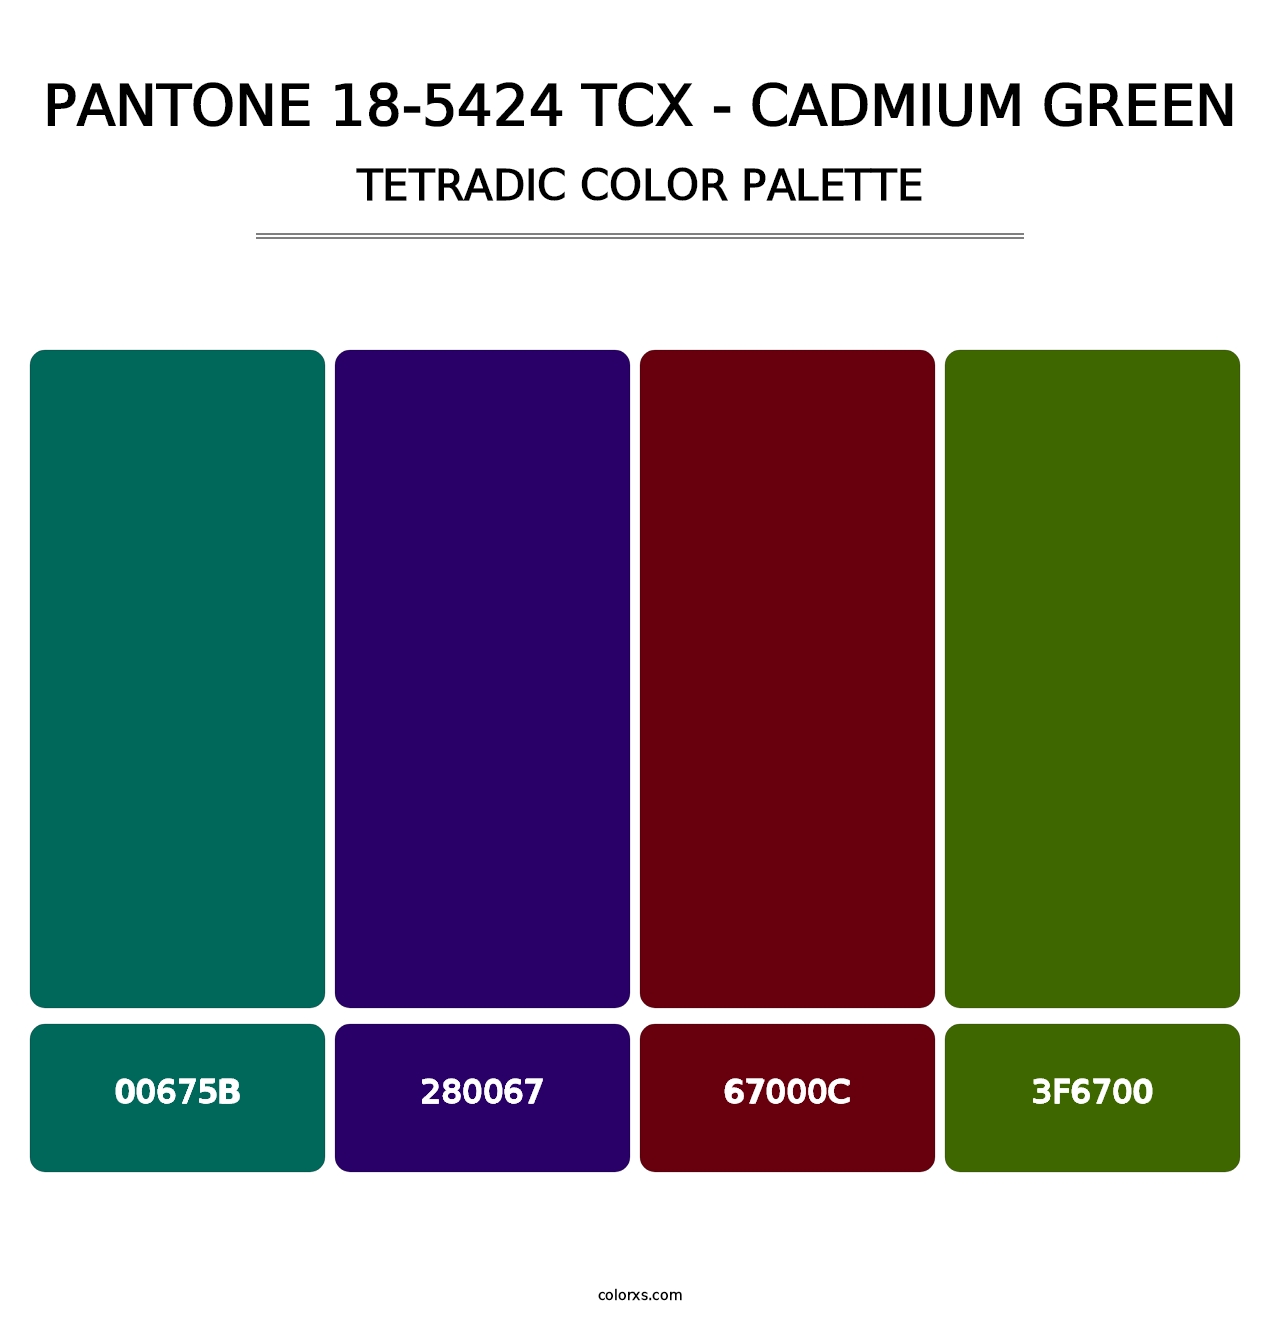 PANTONE 18-5424 TCX - Cadmium Green - Tetradic Color Palette